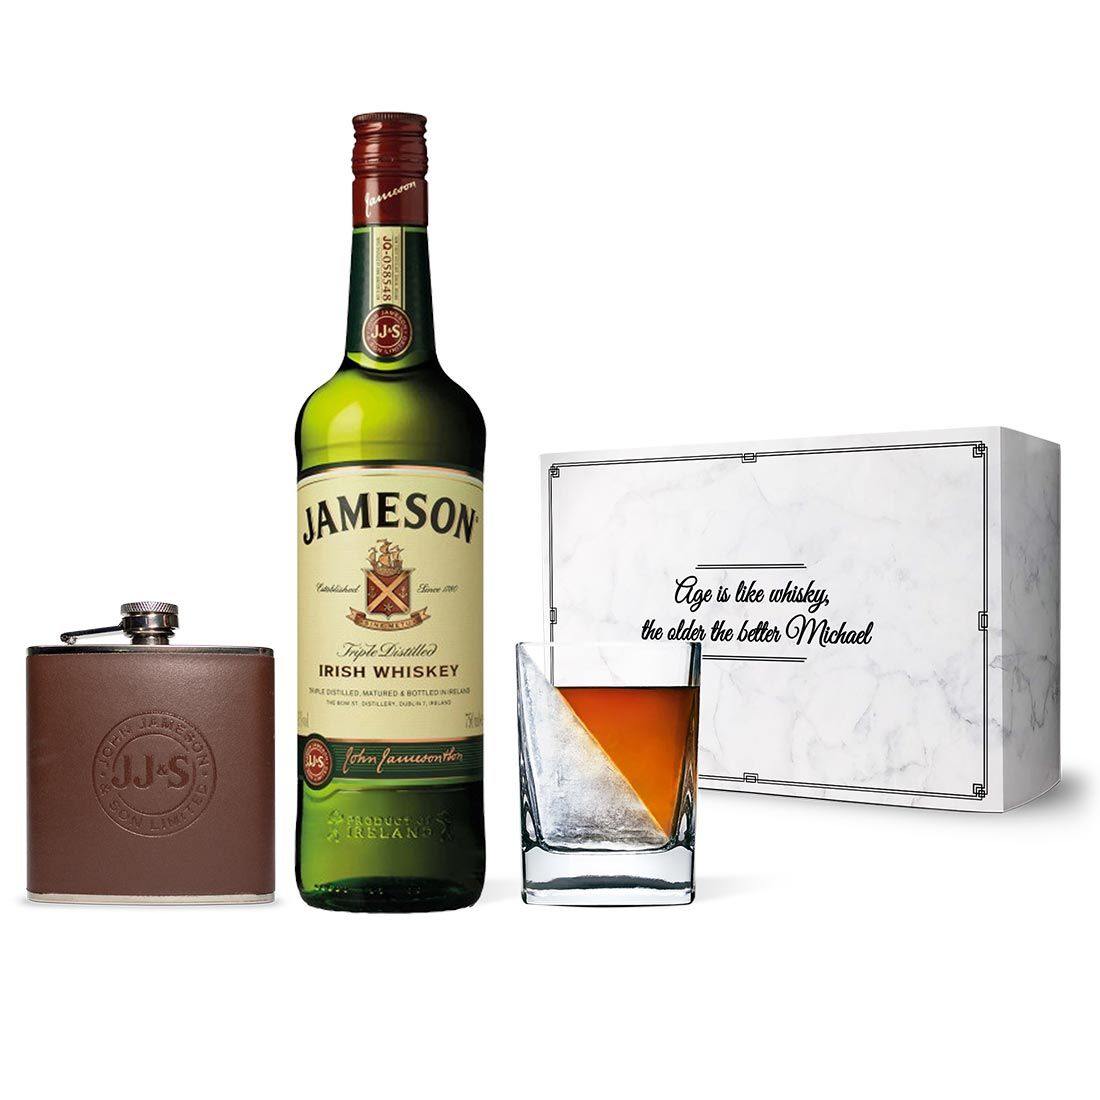 Ящик виски Jameson. Торты в виде виски Jameson. Jameson виски со стаканами. Виски Jameson имбирь.